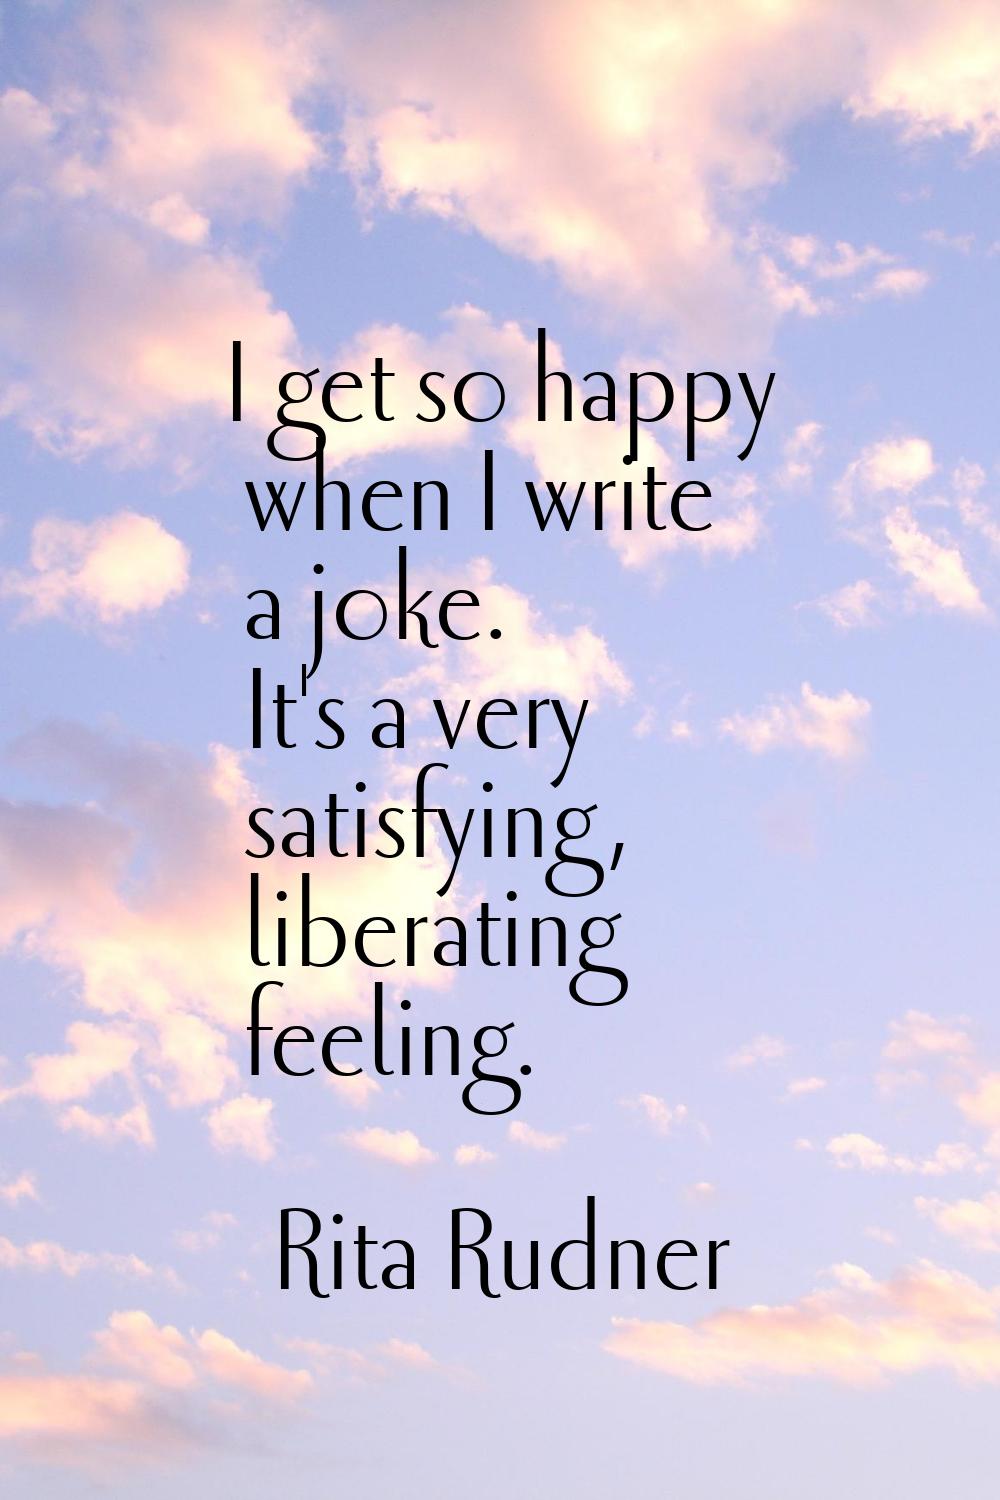 I get so happy when I write a joke. It's a very satisfying, liberating feeling.